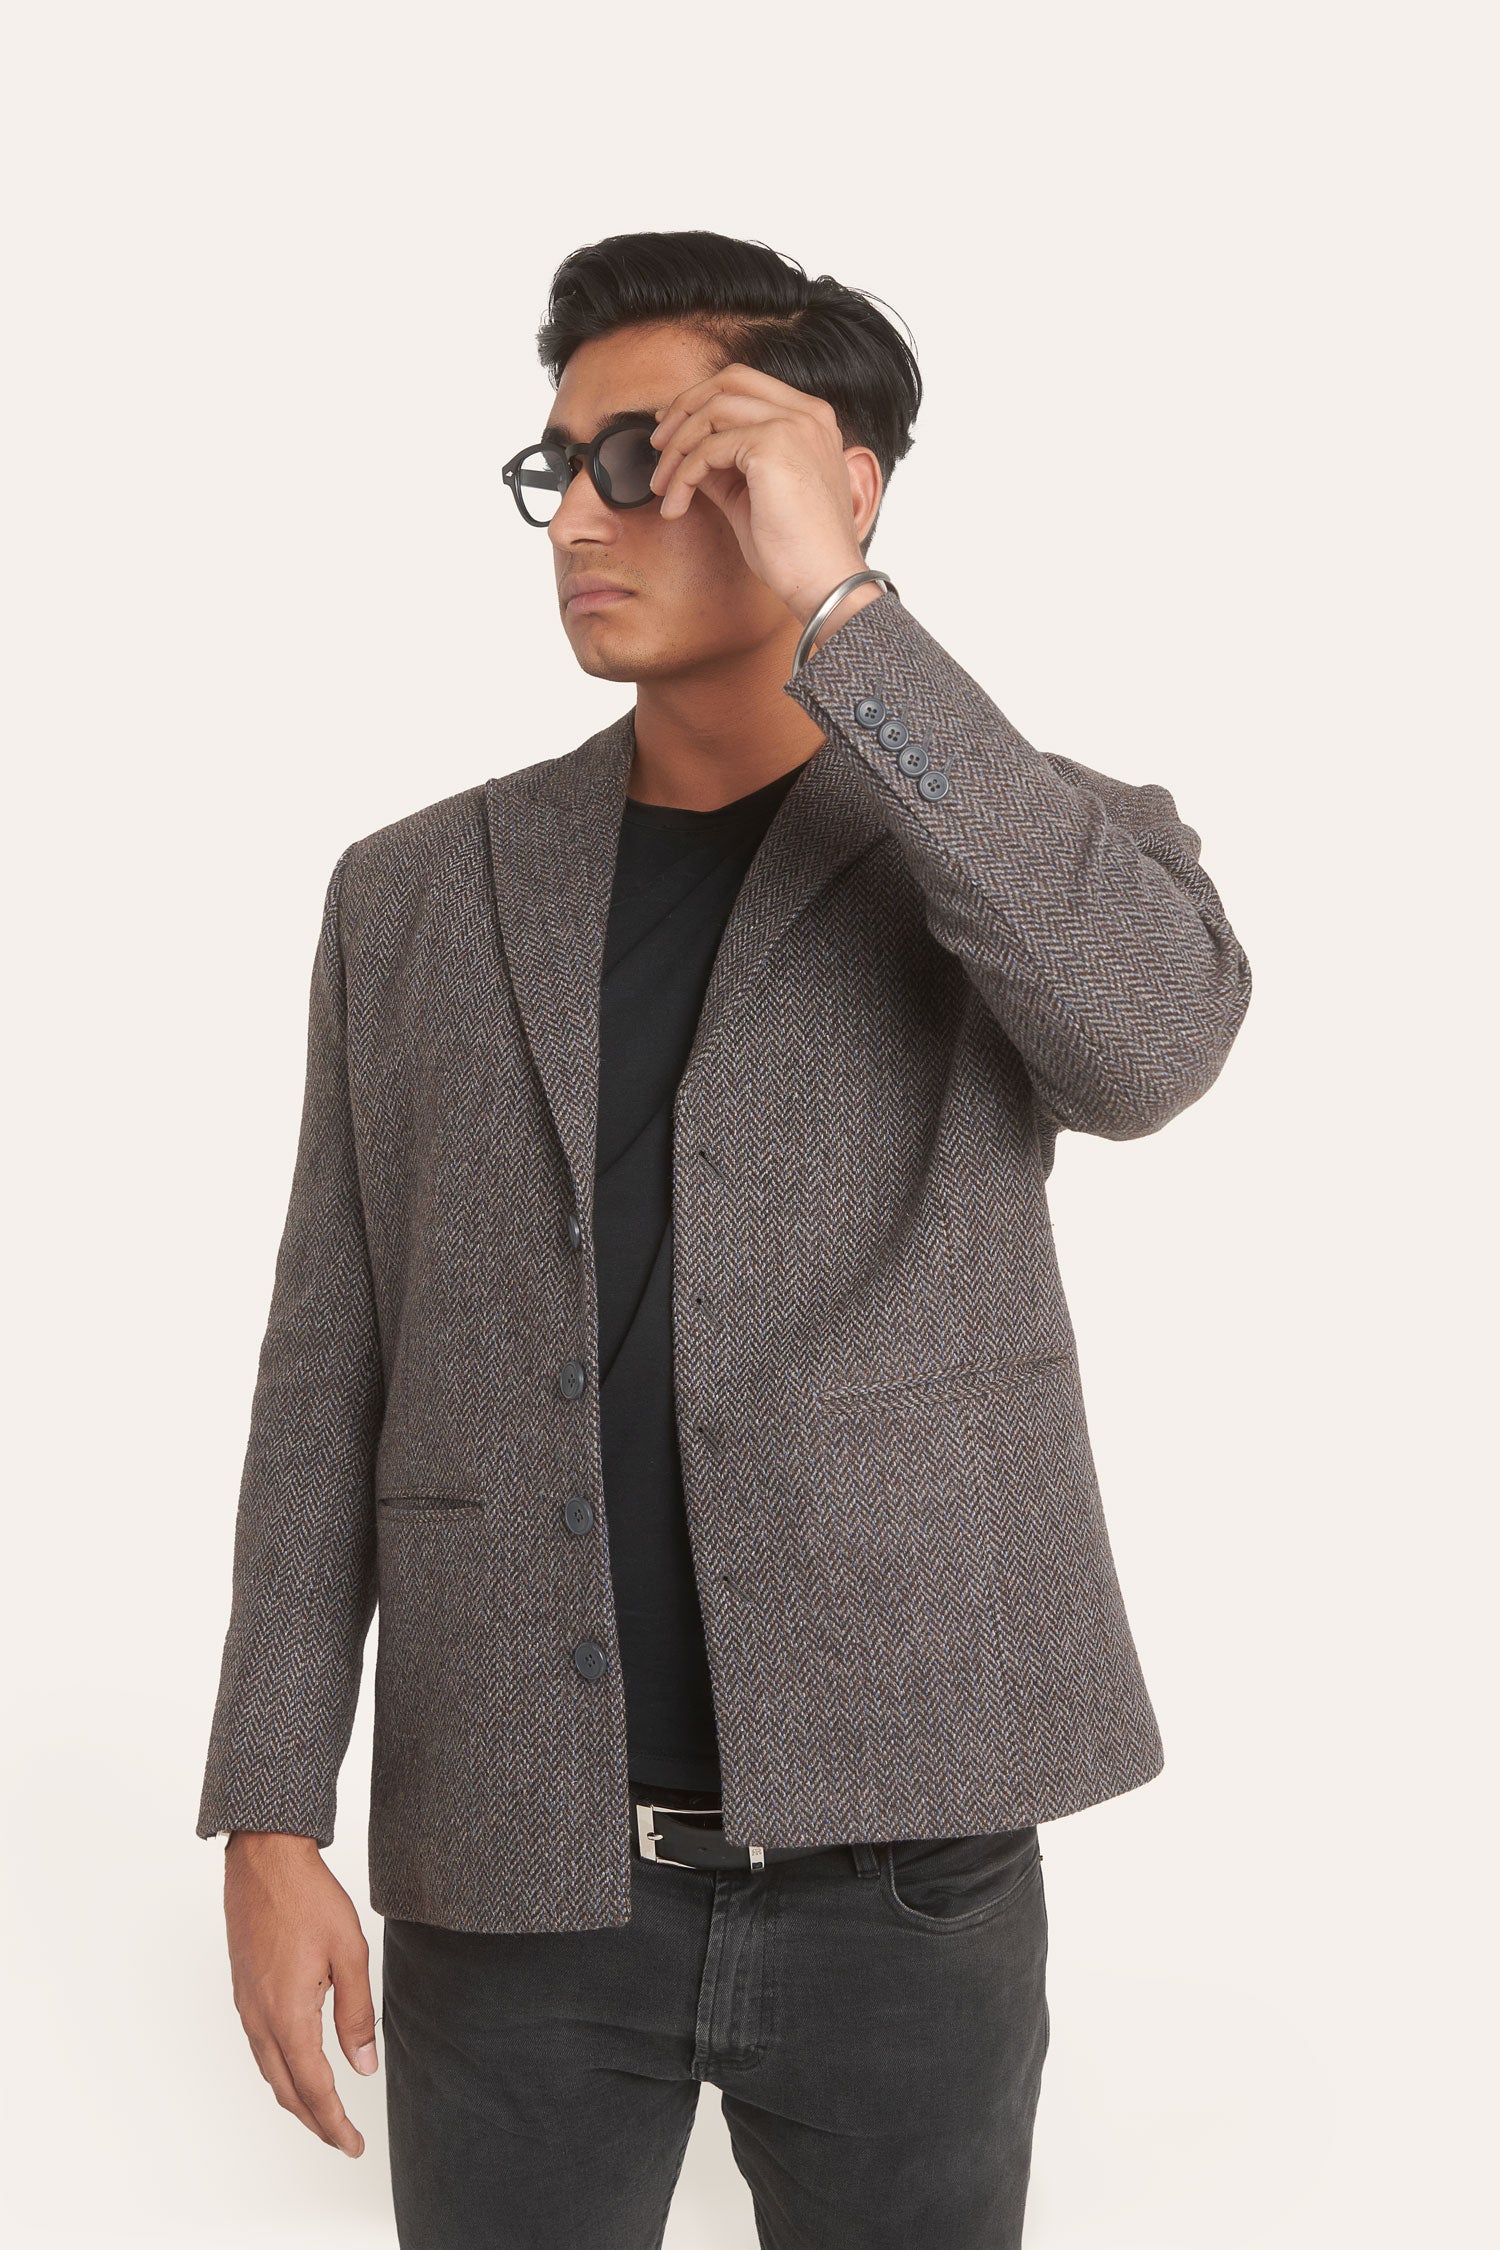 Unisex grey adjustable wool jacket side